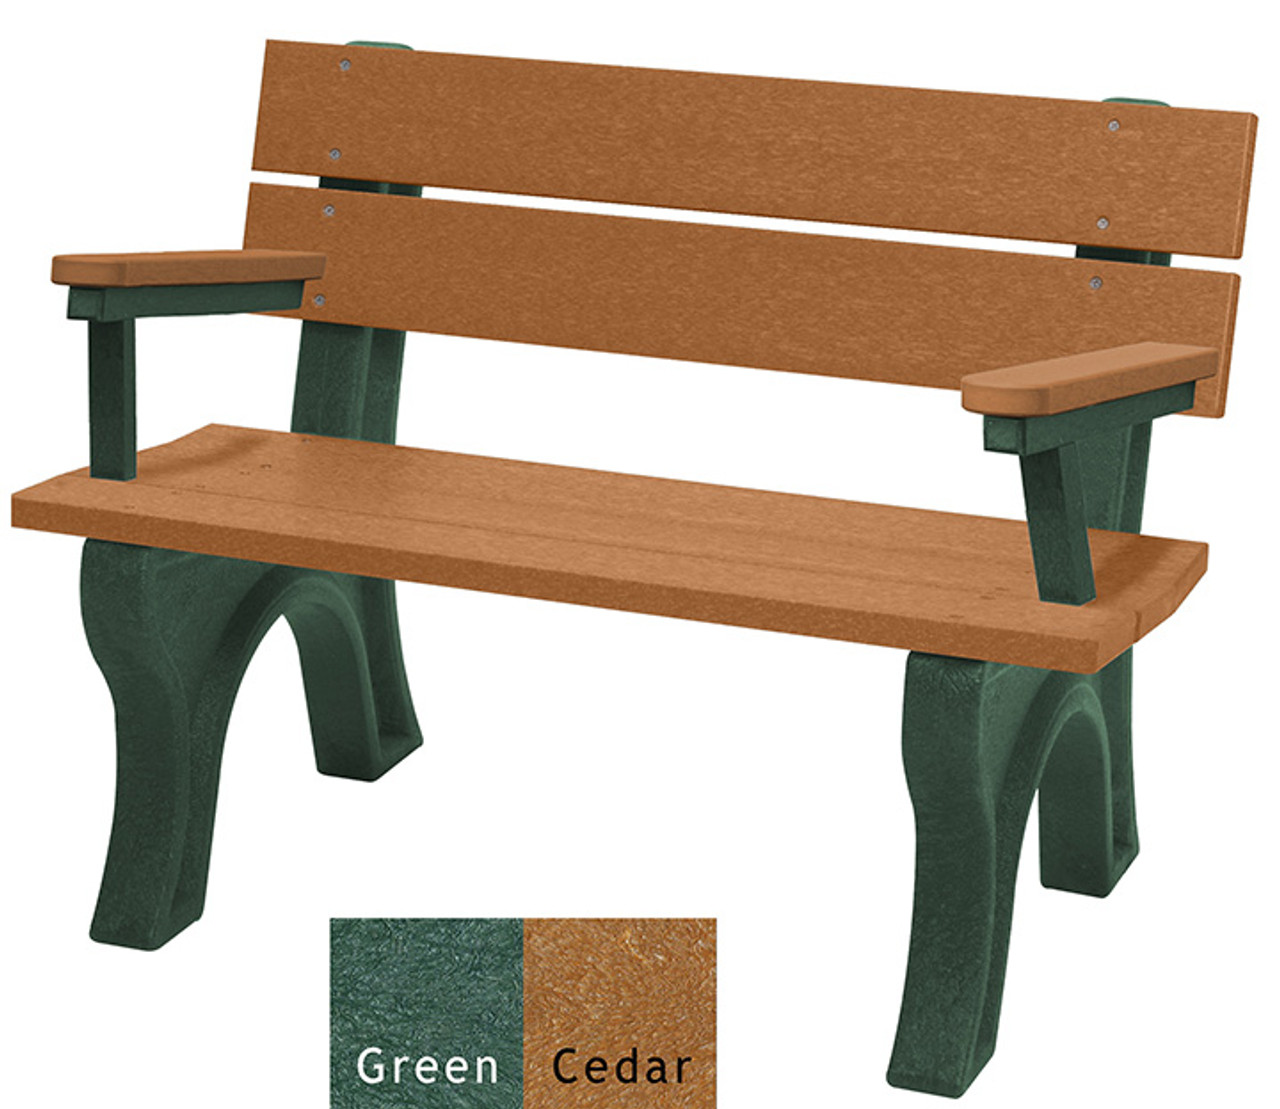 Green and Cedar